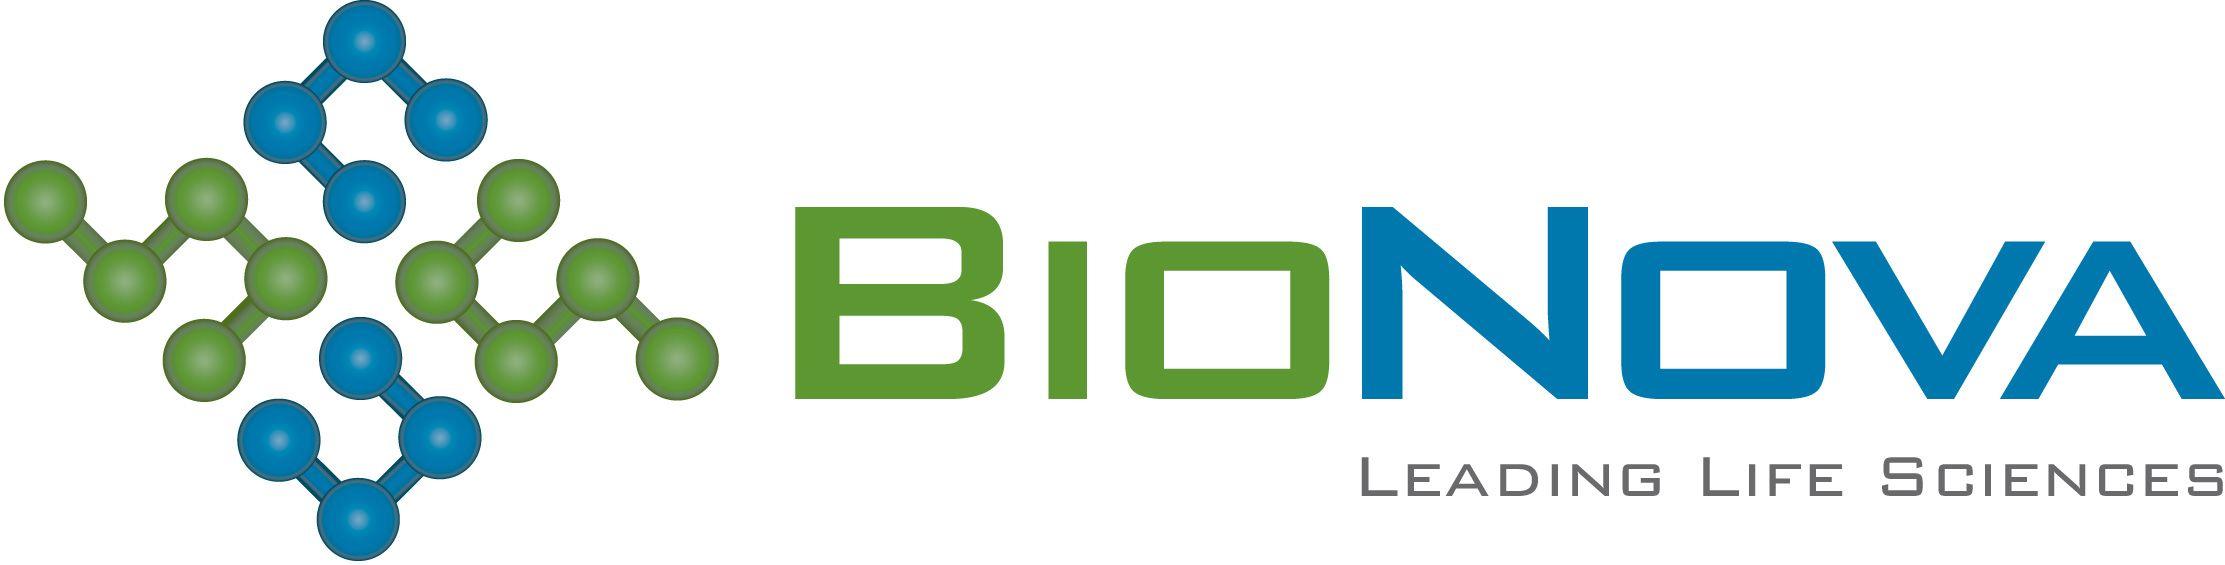 Biotechnology Company Logo - BIOTECanada :: National Biotech Accord